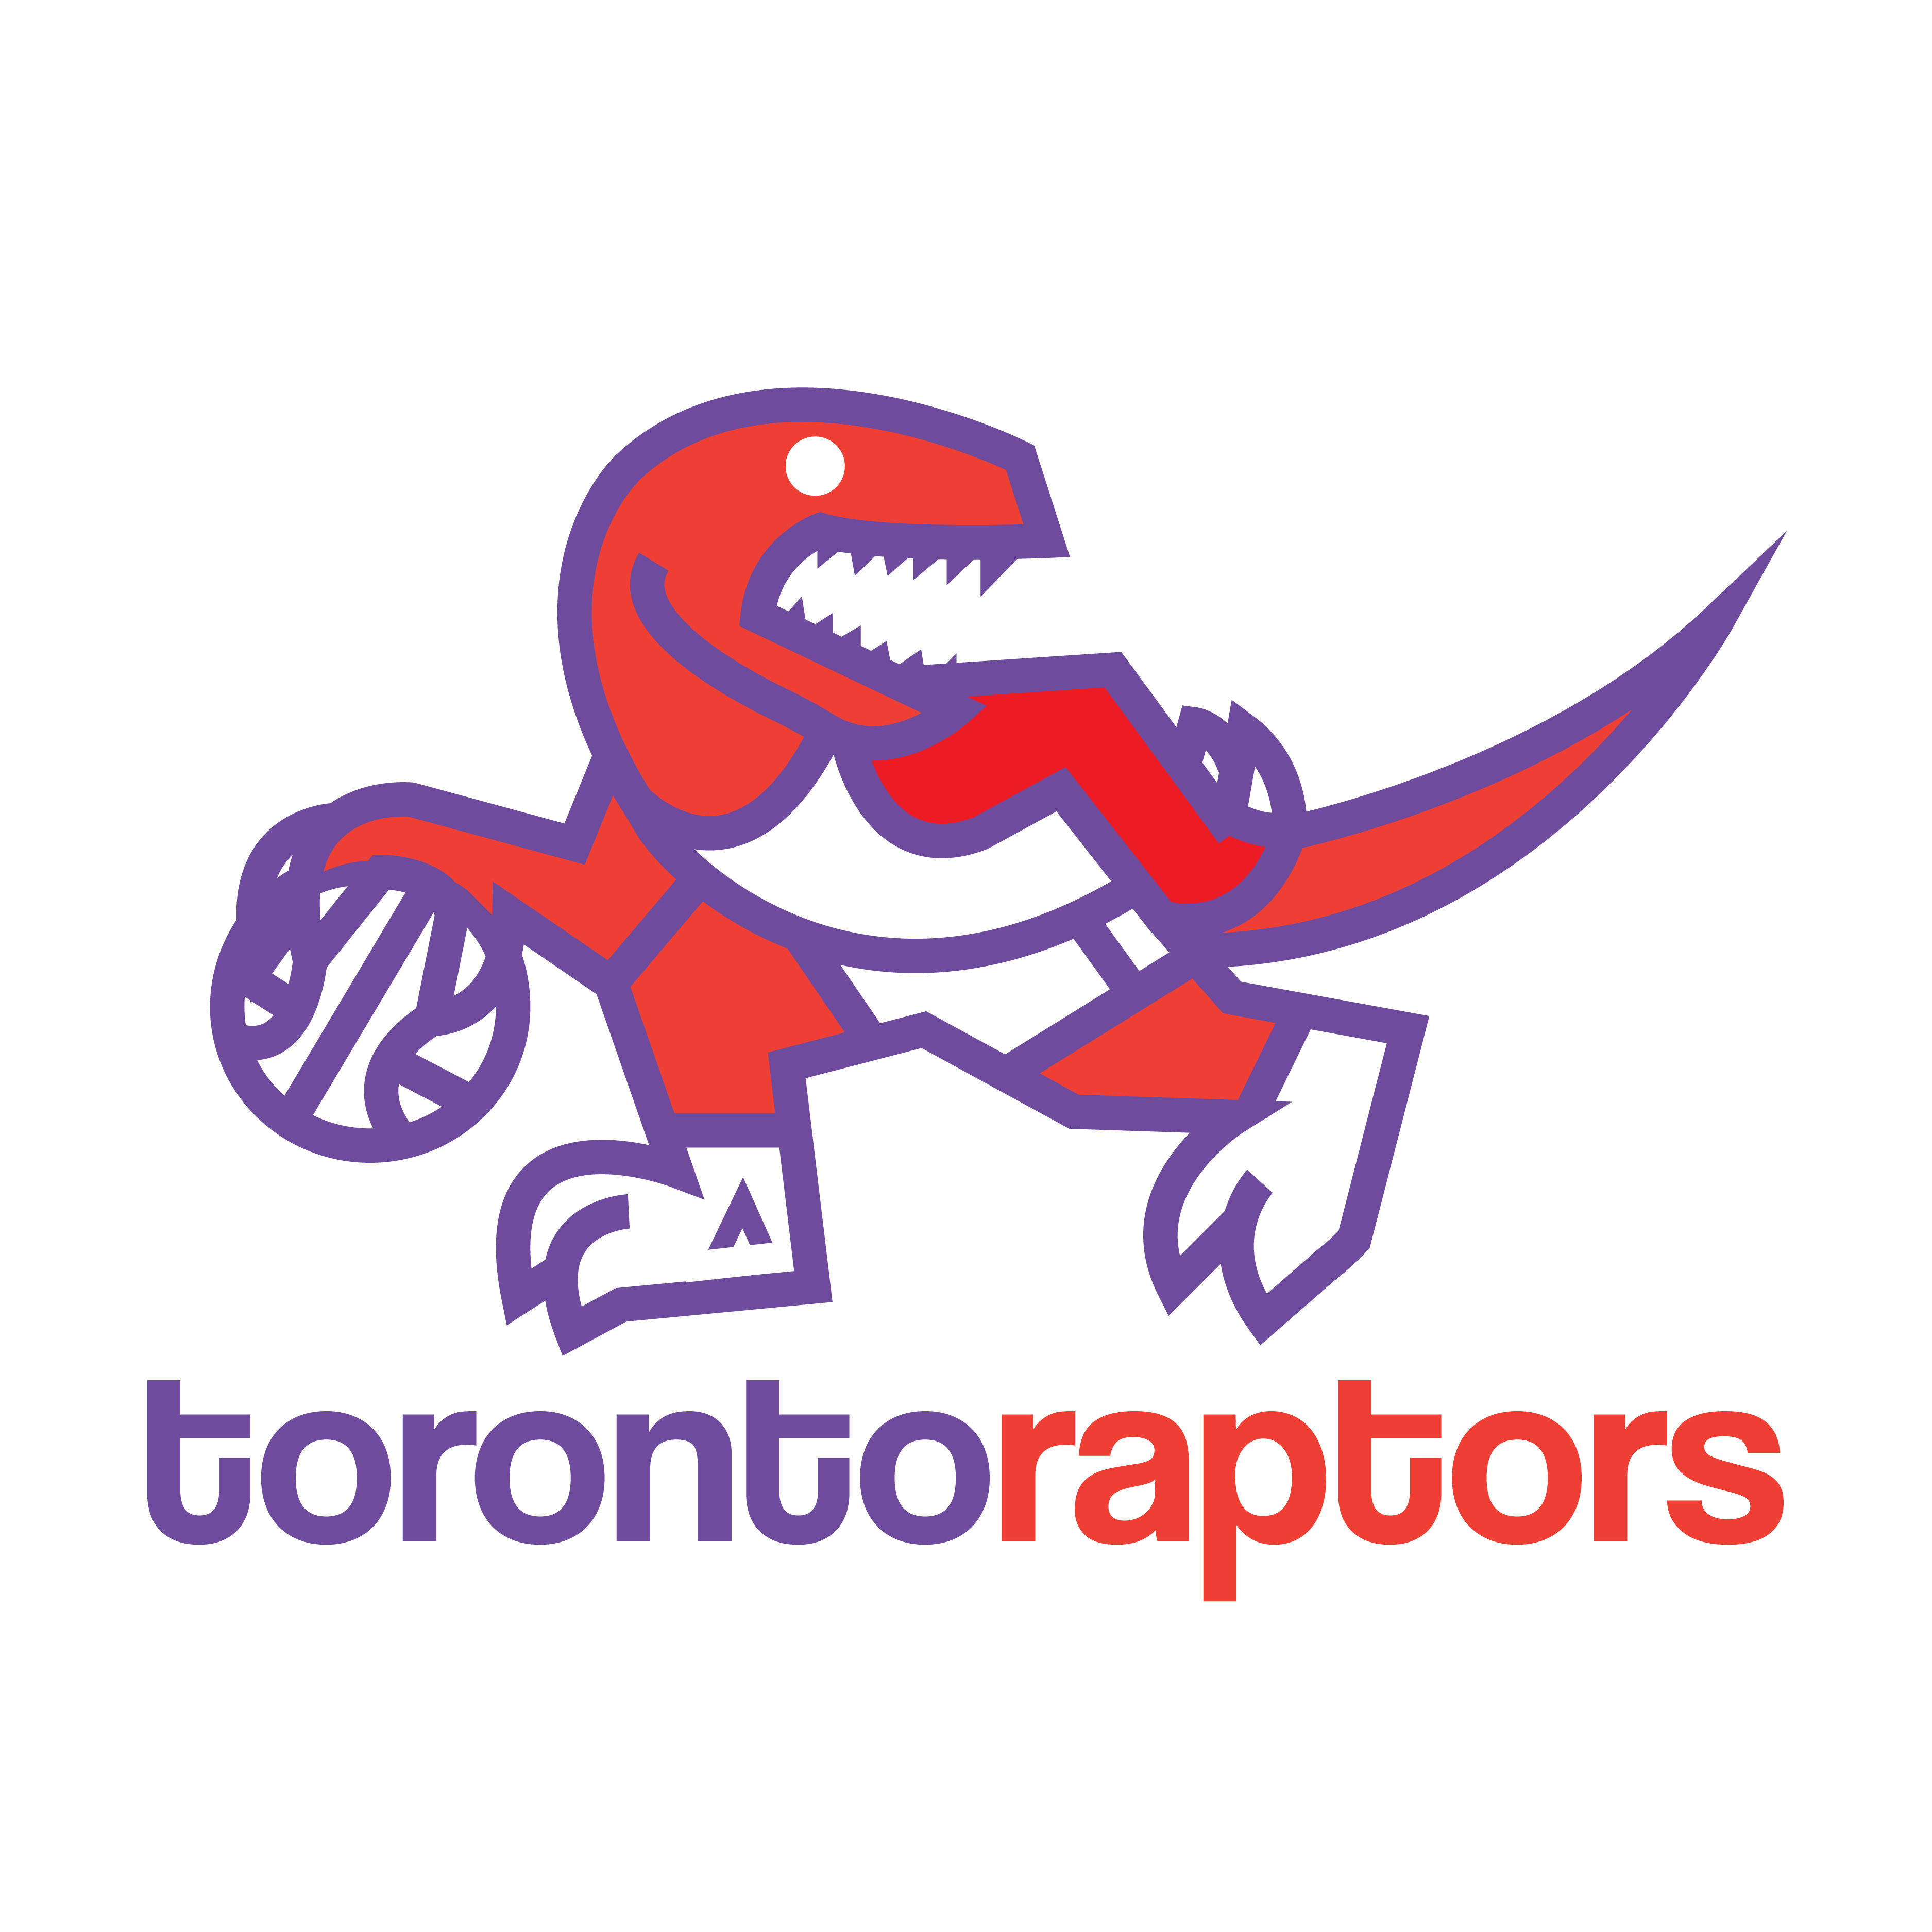 Toronto Raptors 73 logo design by logo designer Kenion Harvey Design for your inspiration and for the worlds largest logo competition